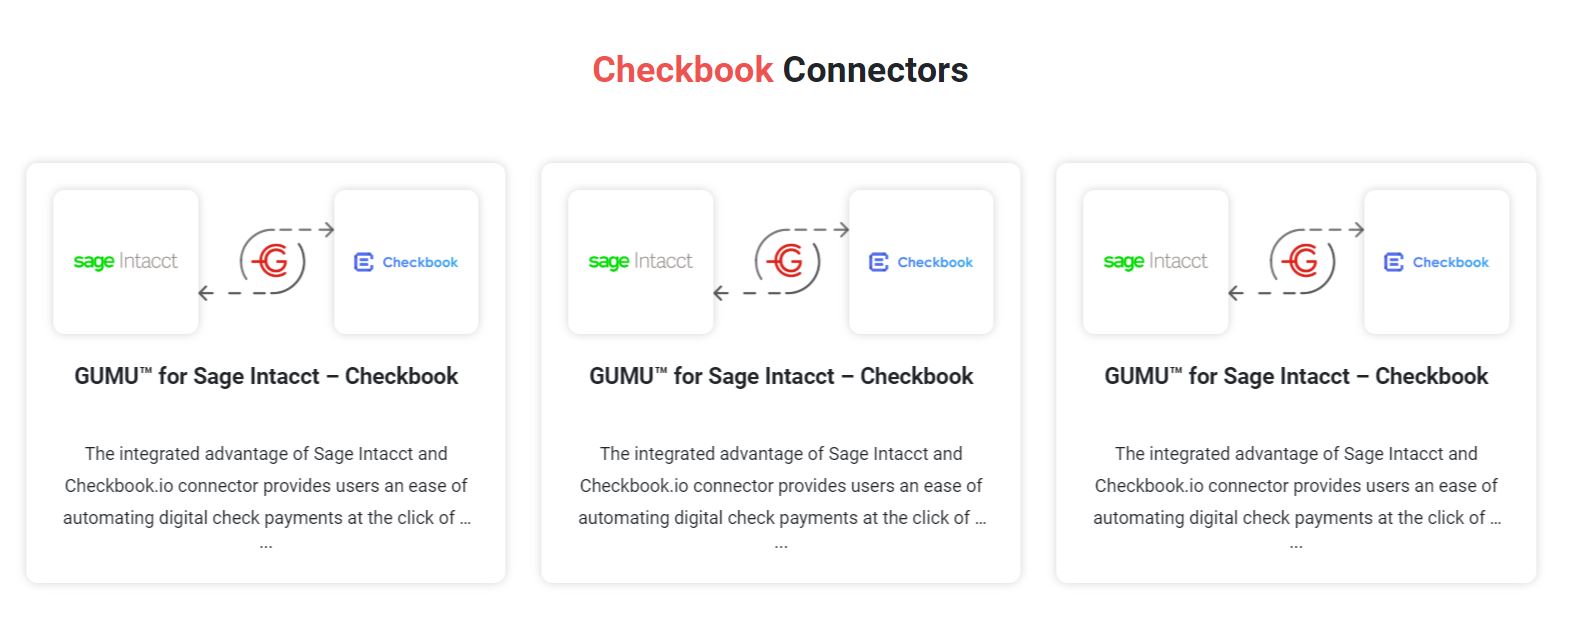 Checkbook Connector